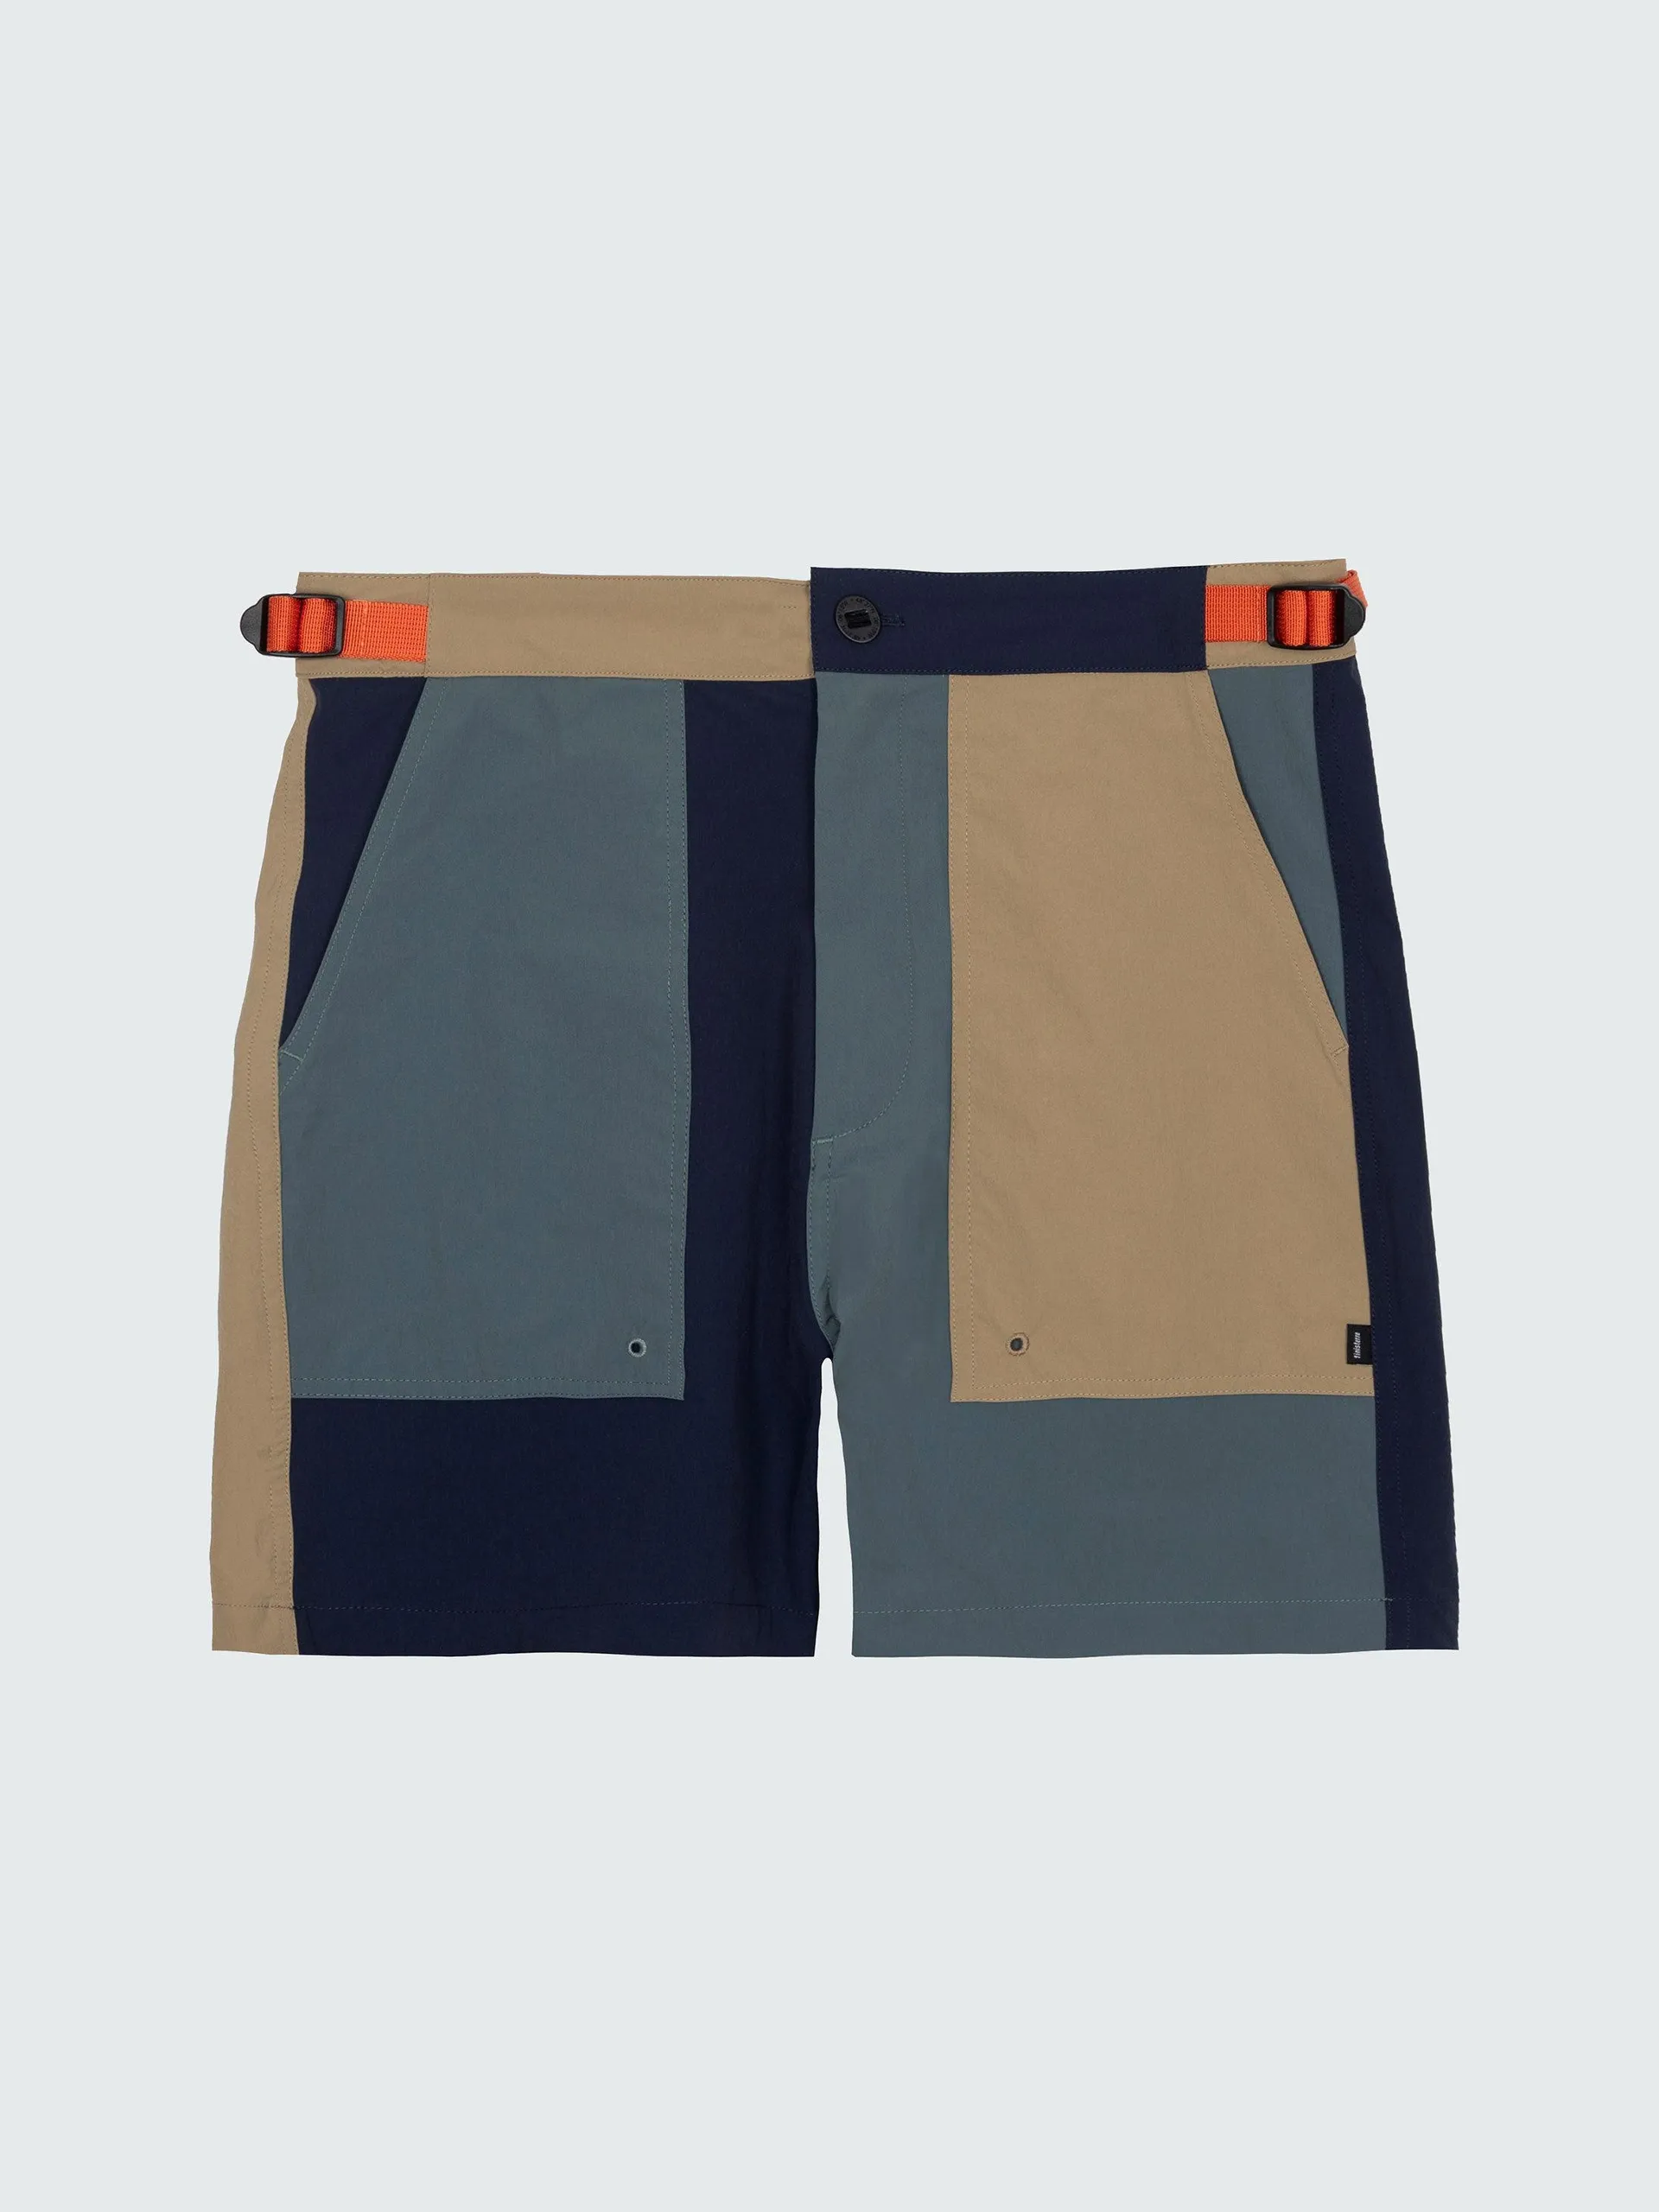 Walker Hybrid Shorts